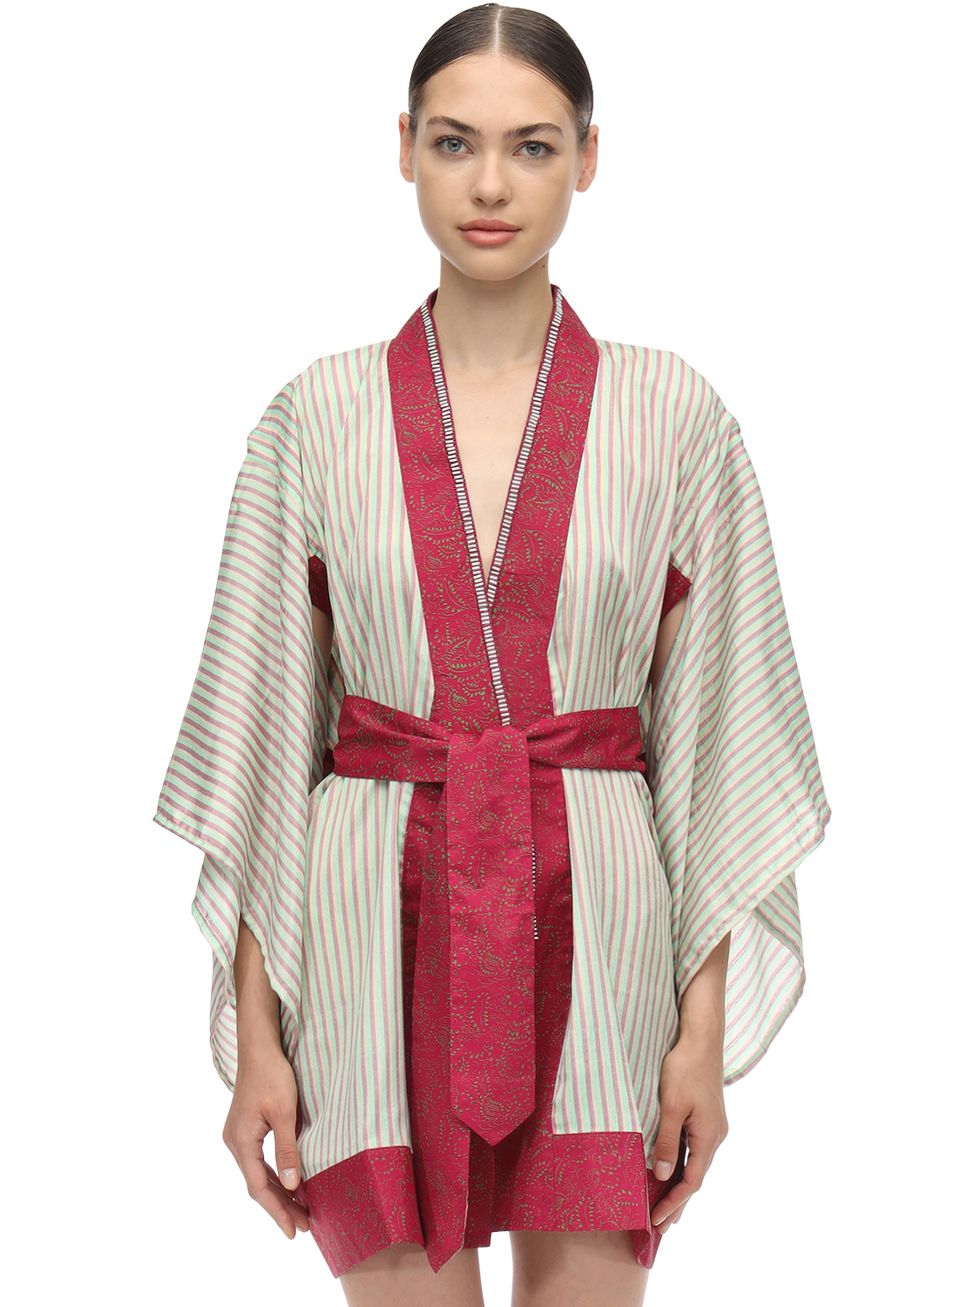 Clothing, Kimono, Robe, Outerwear, Costume, Maroon, Sleeve, Beige, Neck, Dress, 